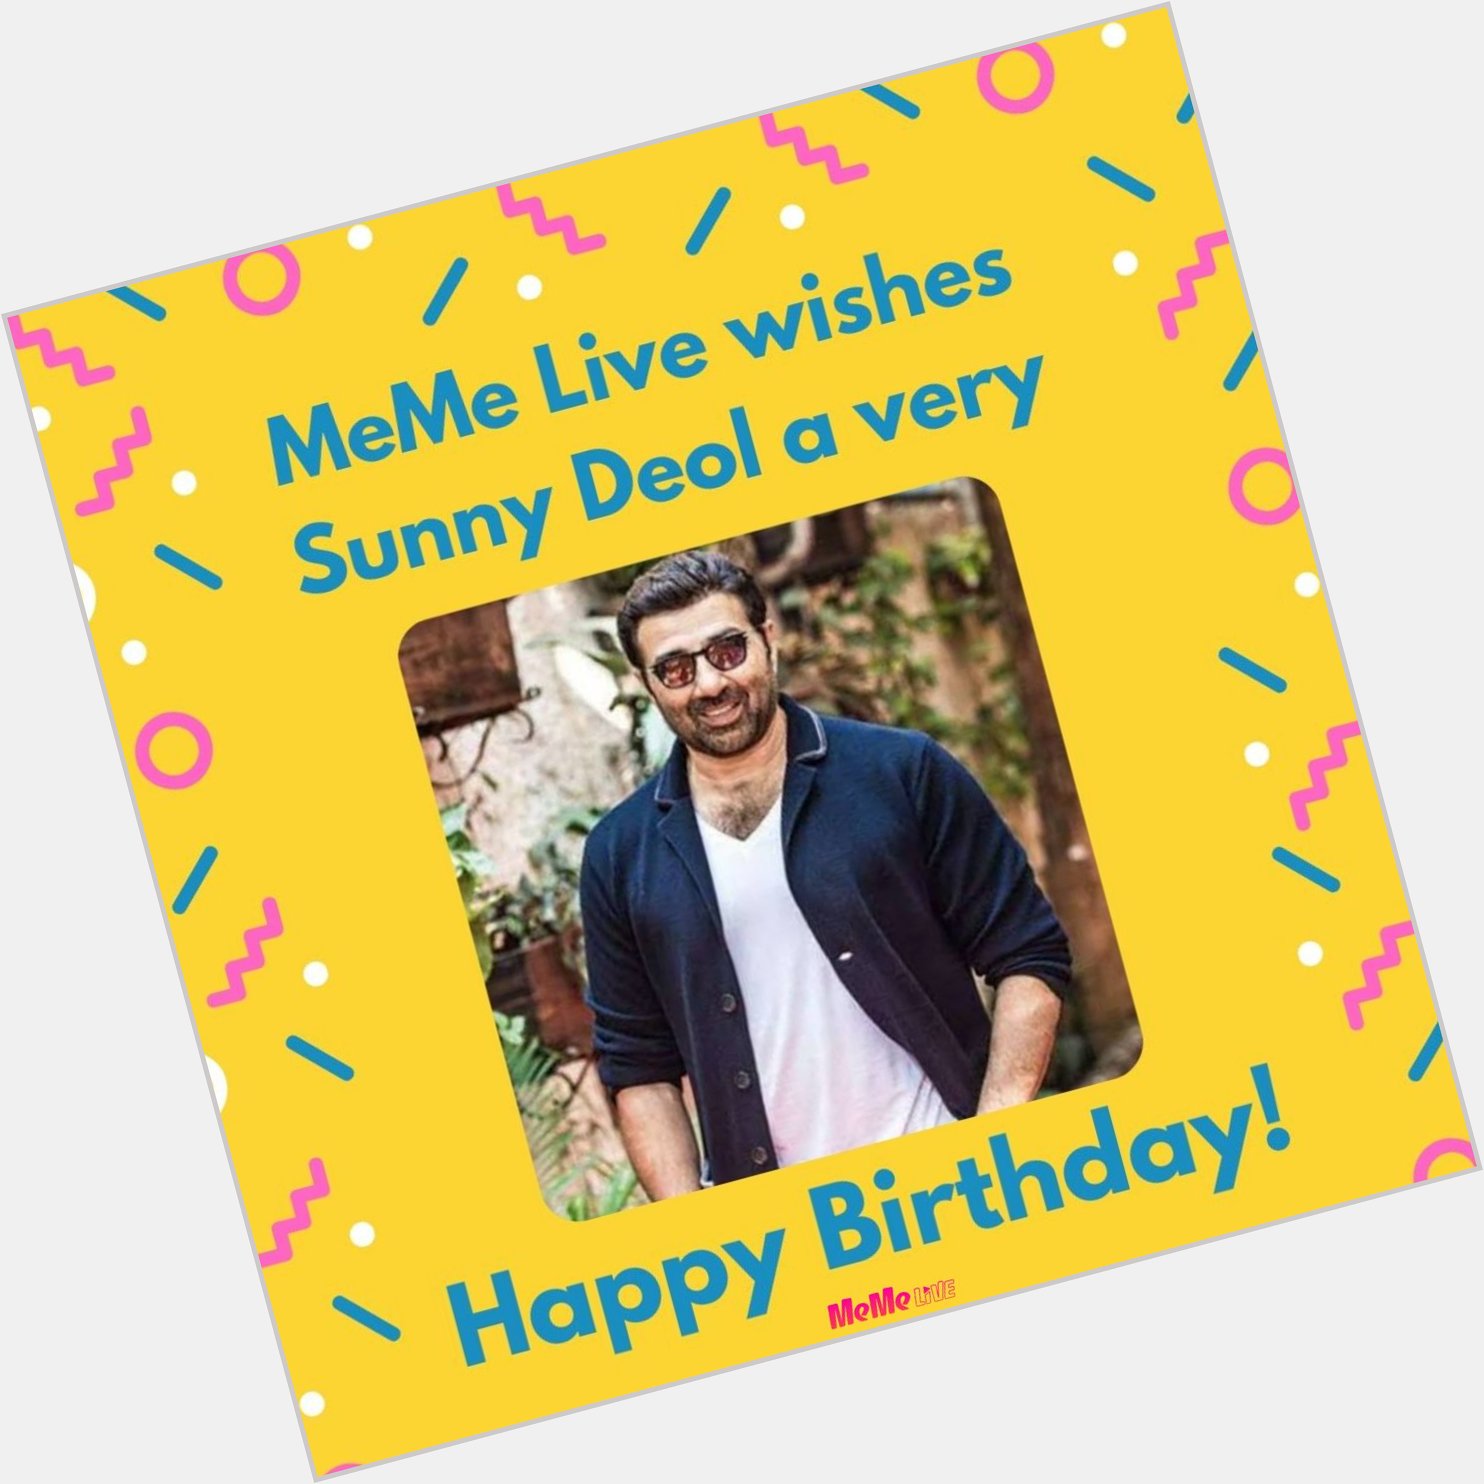 Wishing Sunny Deol a very Happy Birthday       